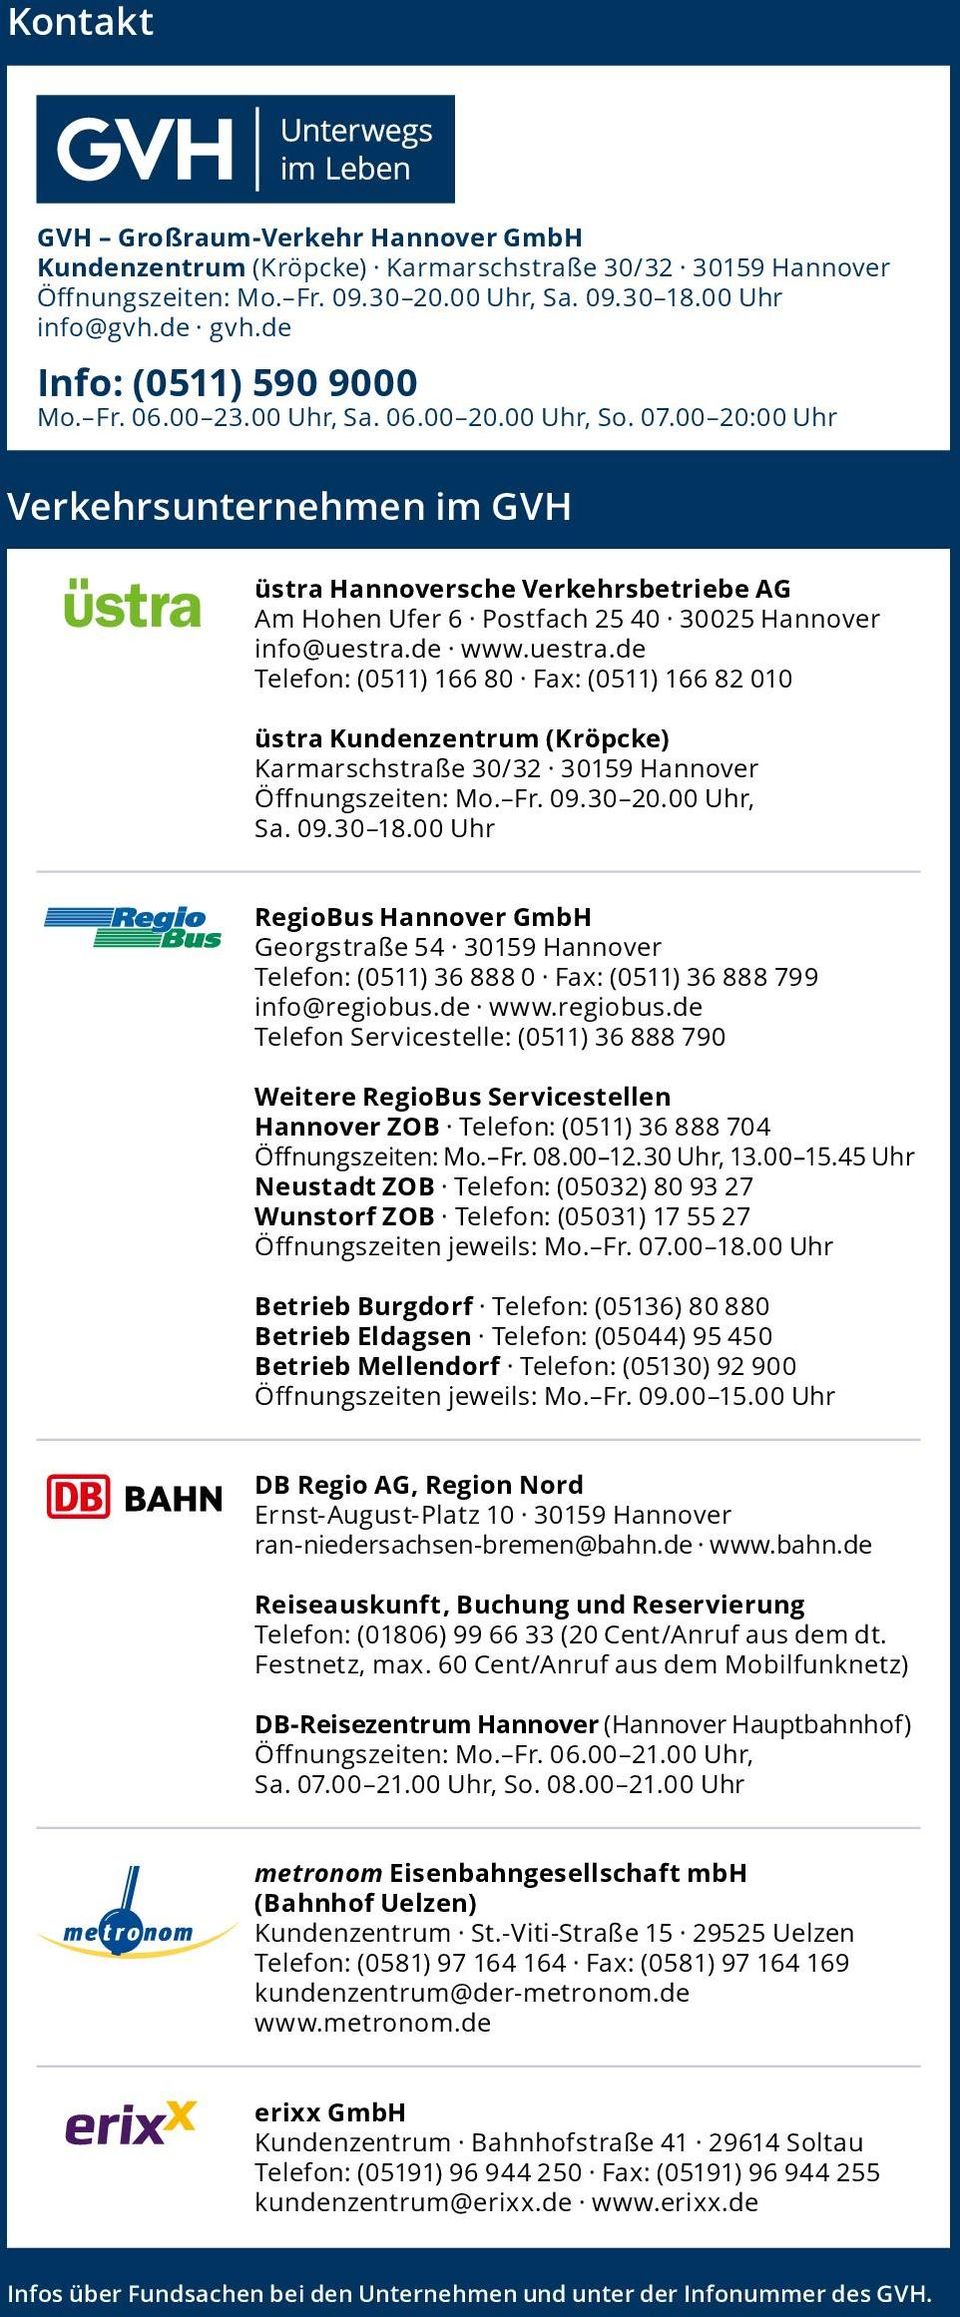 00 20:00 Uhr Verkehrsunternehmen im GVH üstra Hannoversche Verkehrsbetriebe AG Am Hohen Ufer 6 Postfach 25 40 30025 Hannover info@uestra.